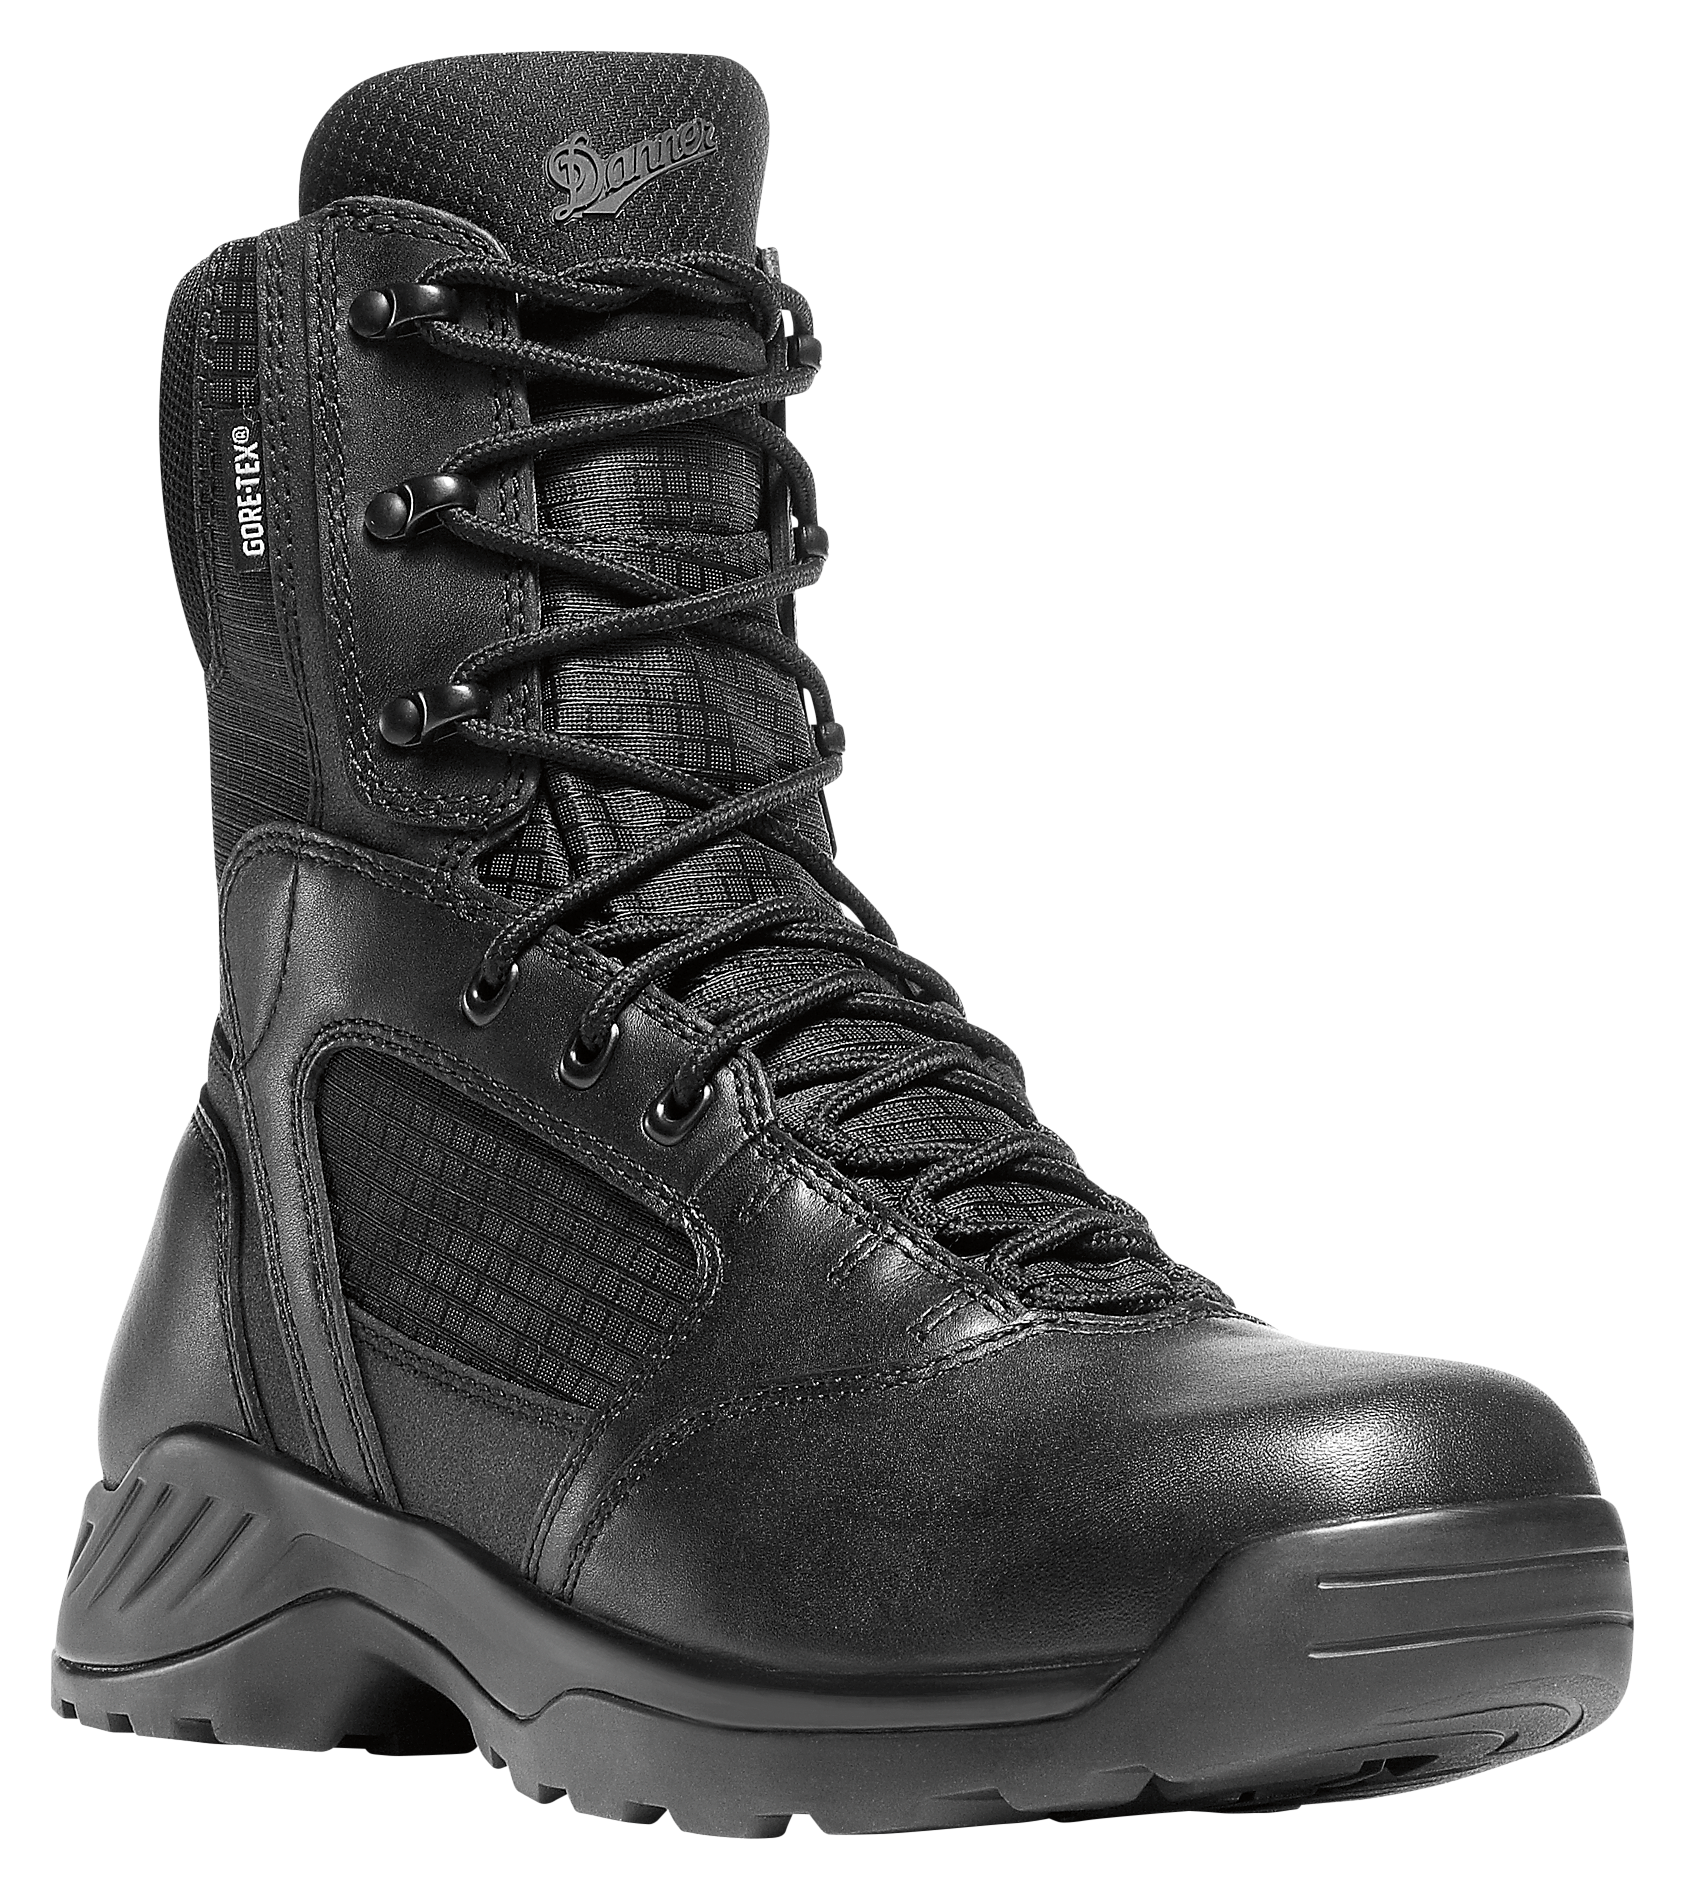 Danner Kinetic GTX Side-Zip Waterproof Tactical Duty Boots for Men - Black - 7.5M